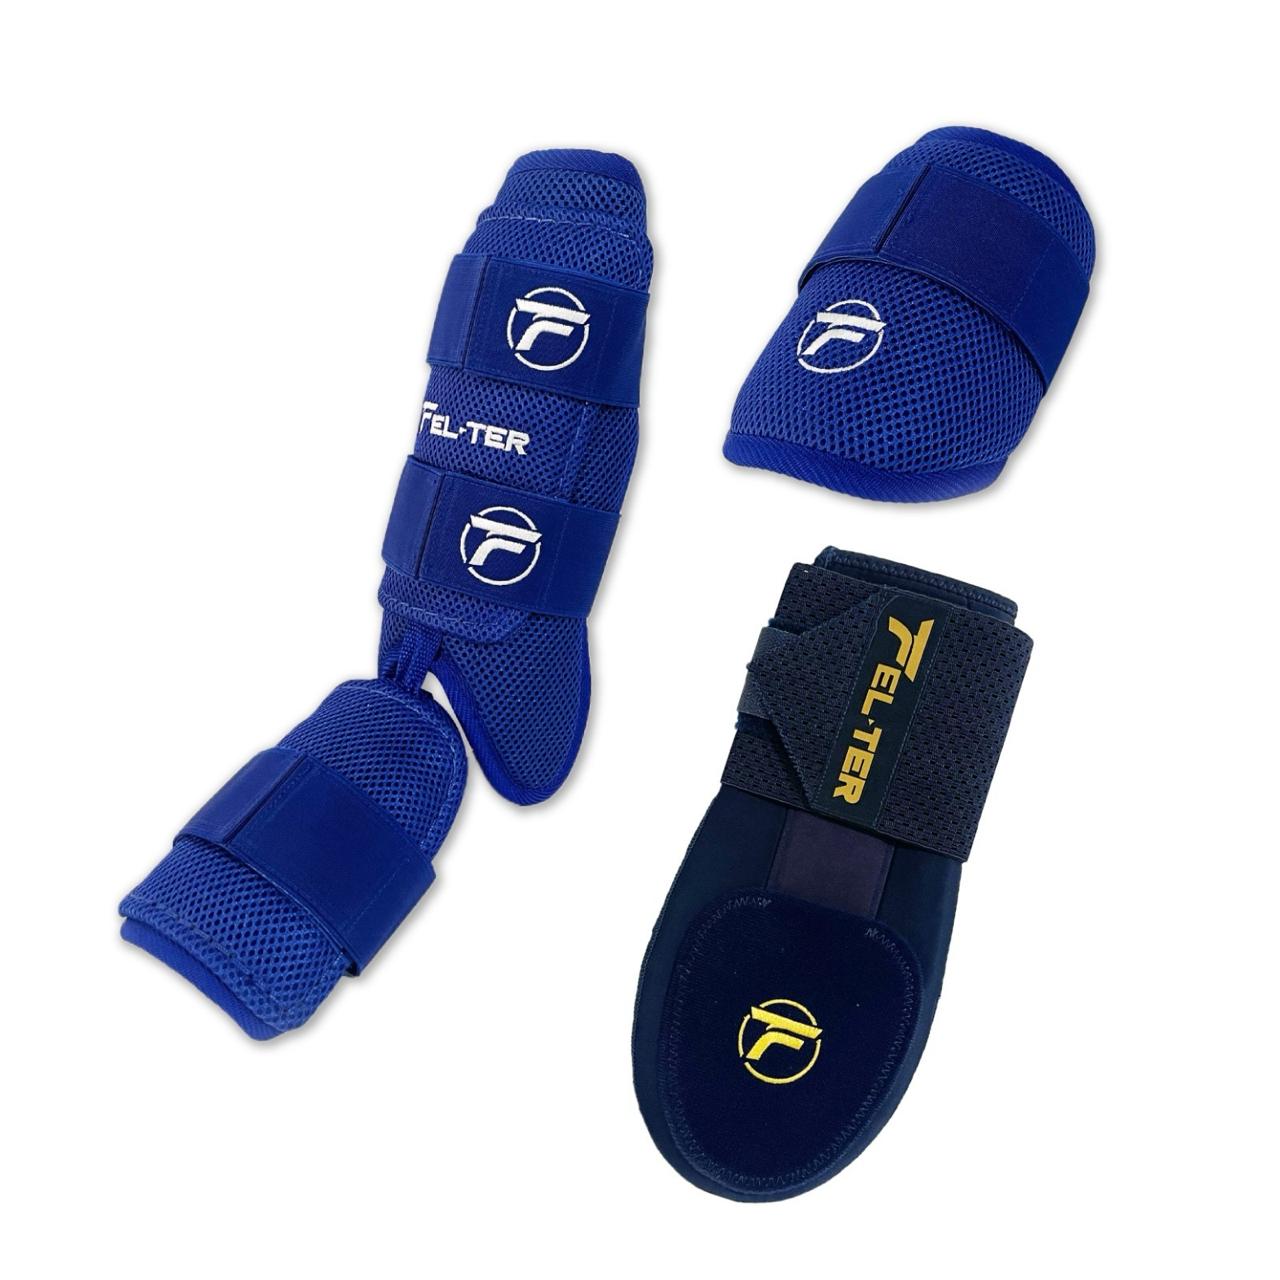 Kit 3 Piezas Protecciones De Bateo Velcro + Slidding Glove Adulto